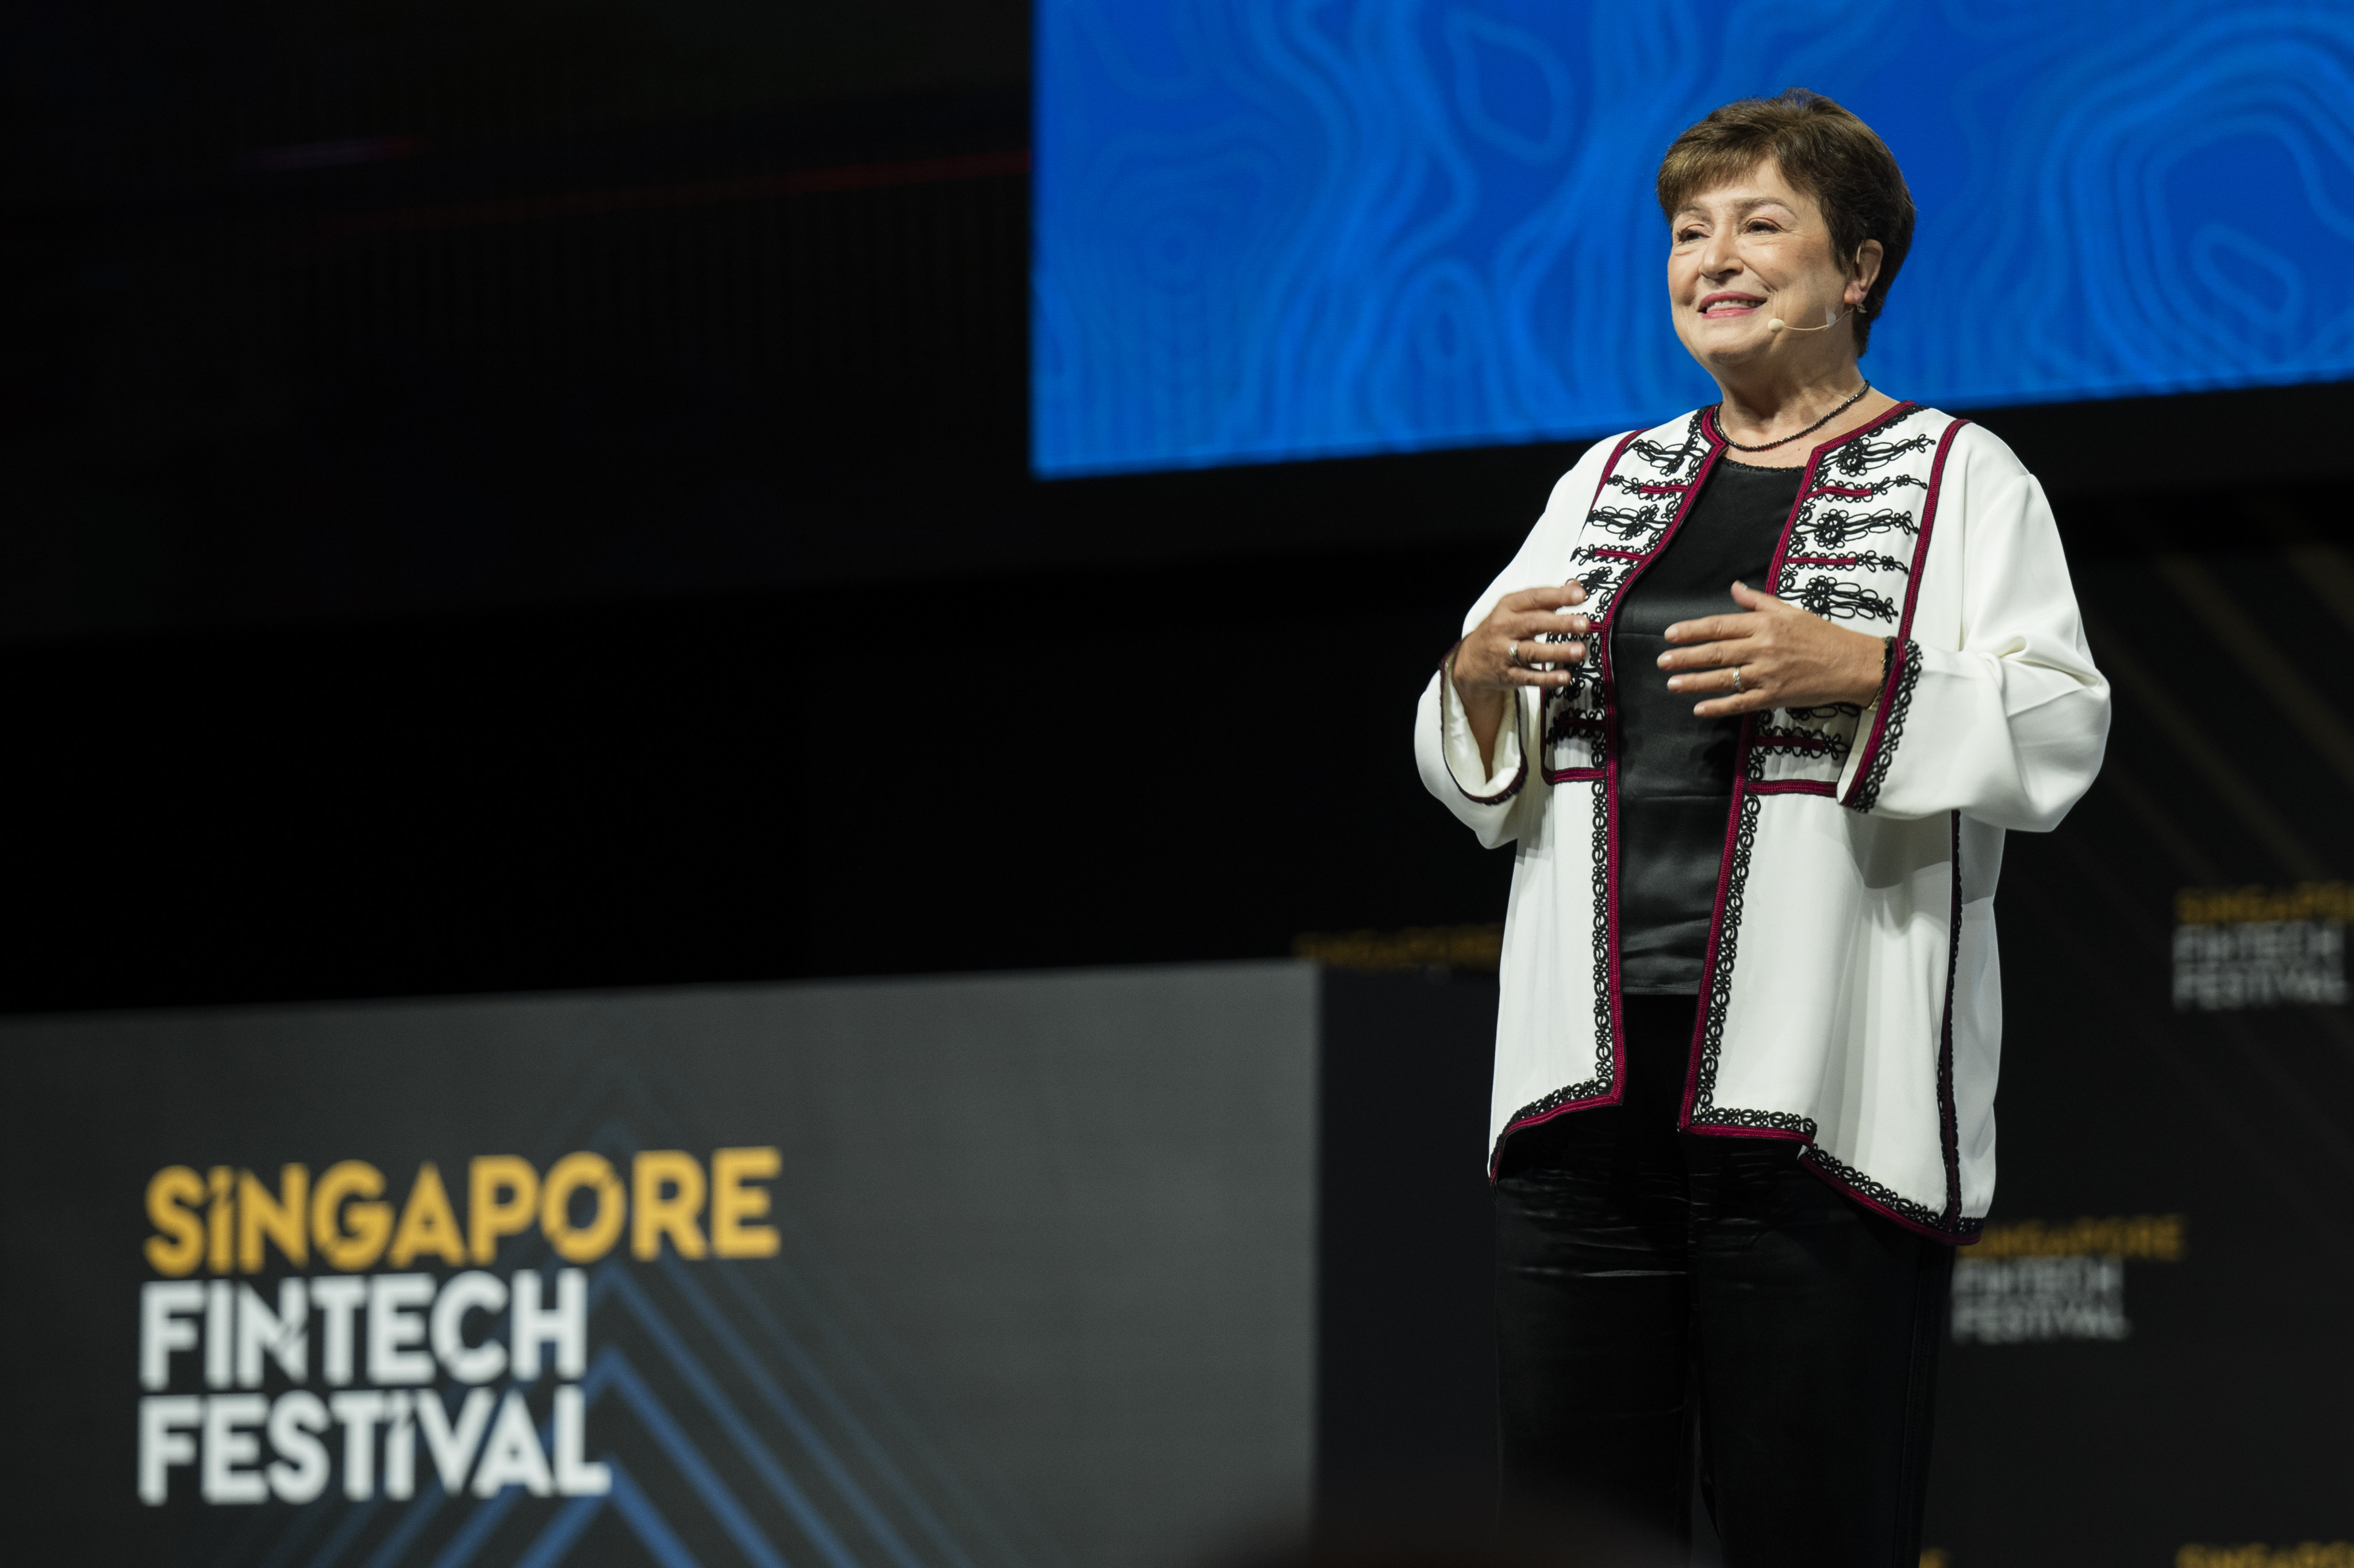 Kristalina Georgieva, managing director of the International Monetary Fund, at the Singapore Fintech Festival on Wednesday. Photo: Handout